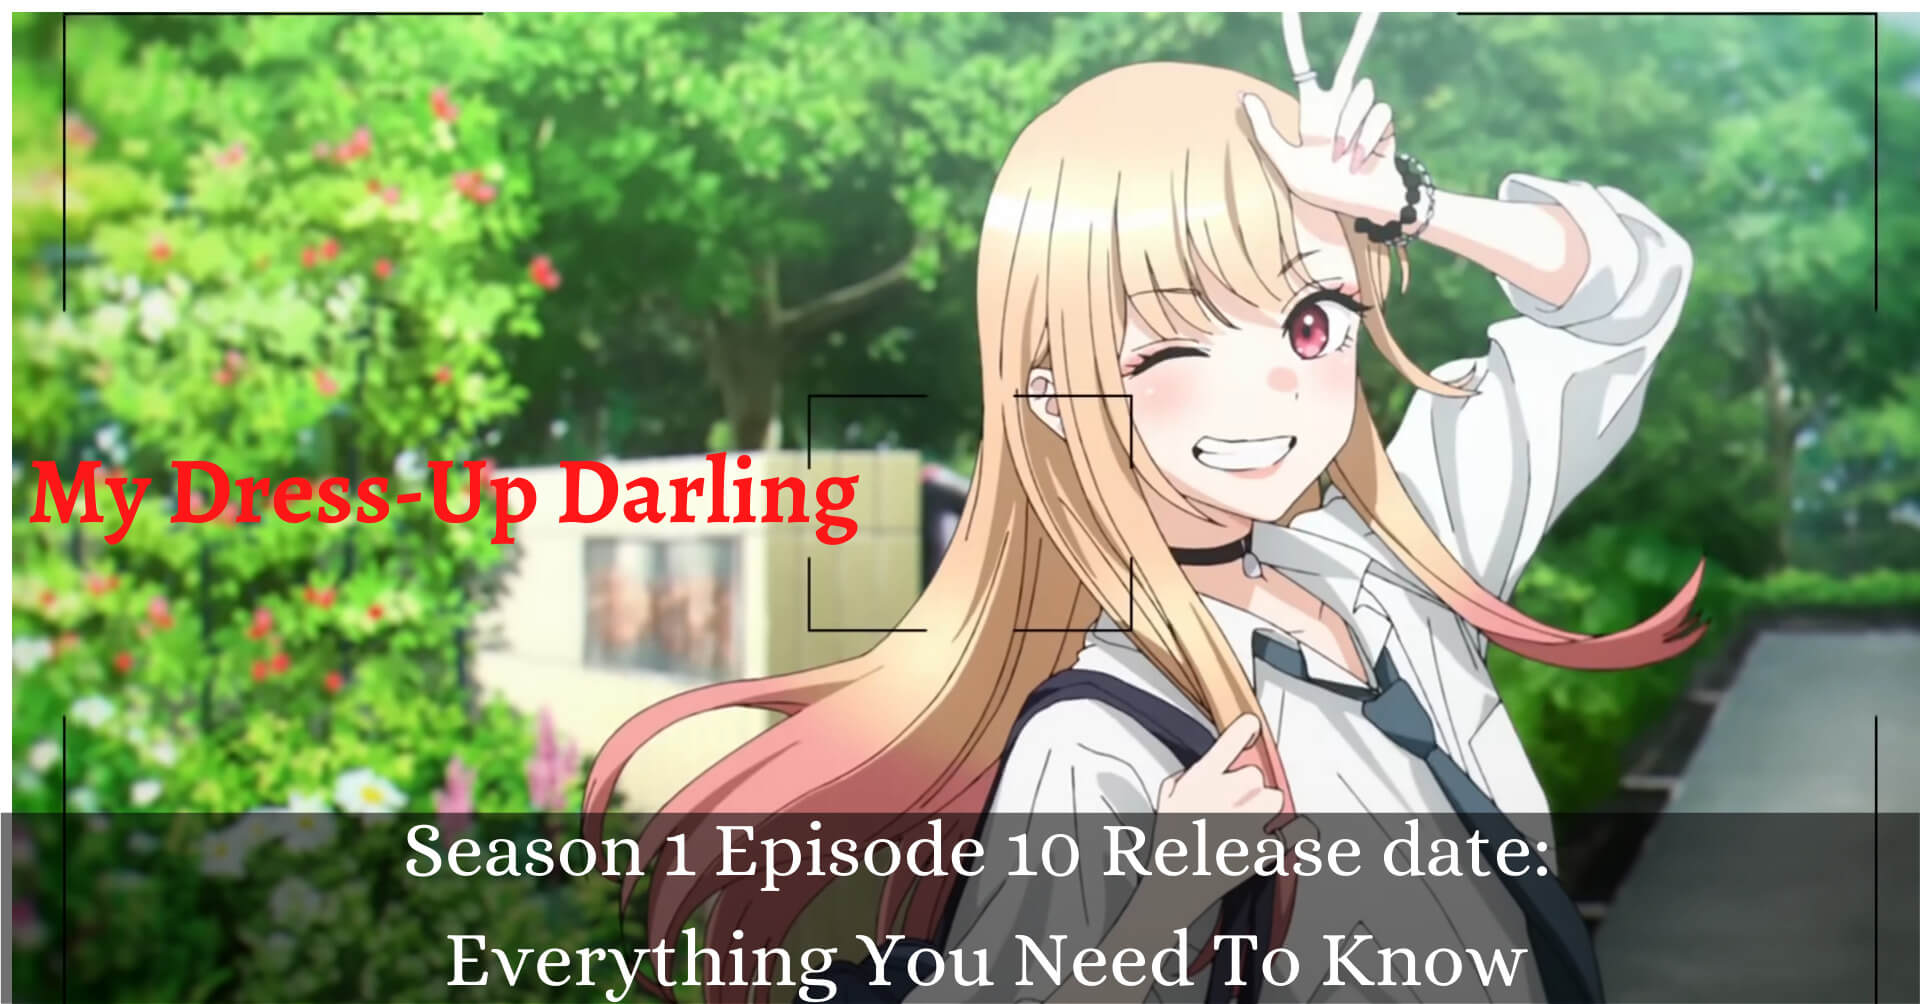 My Dress-Up Darling Season 1 Episode 10 Release date